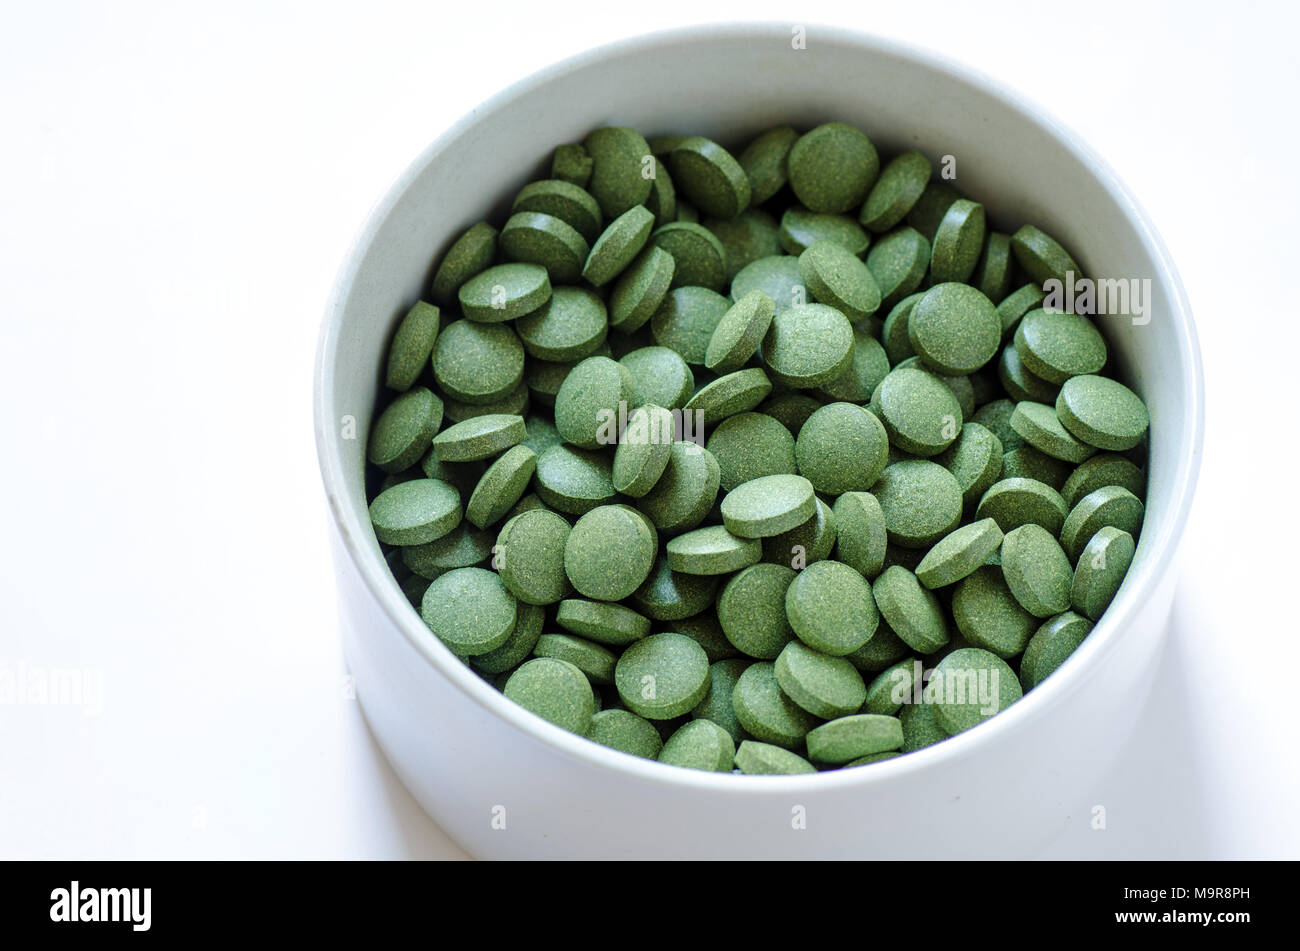 Green chlorella and spirulina pills. Nutritional supplement, healthy lifestyle, alternative natural medicine. Stock Photo